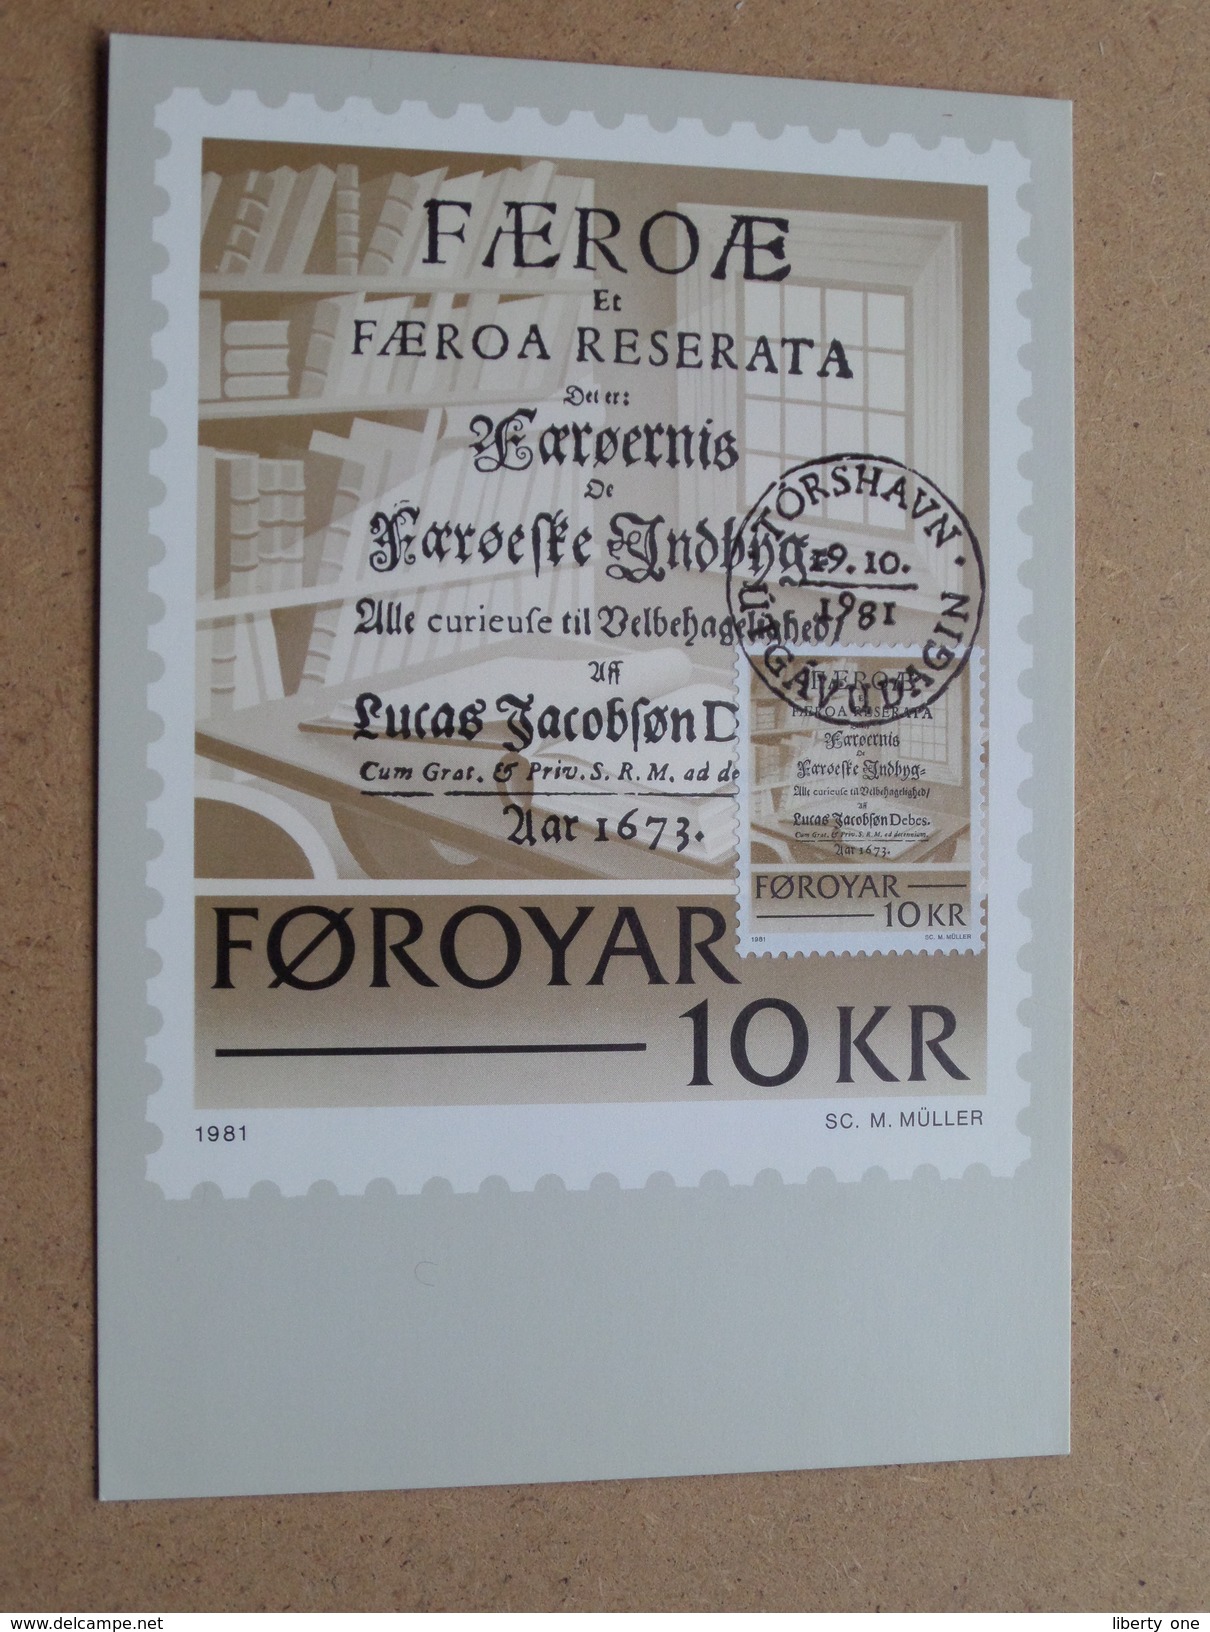 FOROYAR 10 KR (SC. M. MÜLLER) Stamp TORSHAVN 19-10-1981 ( Zie Foto ) ! - Maximumkarten (MC)